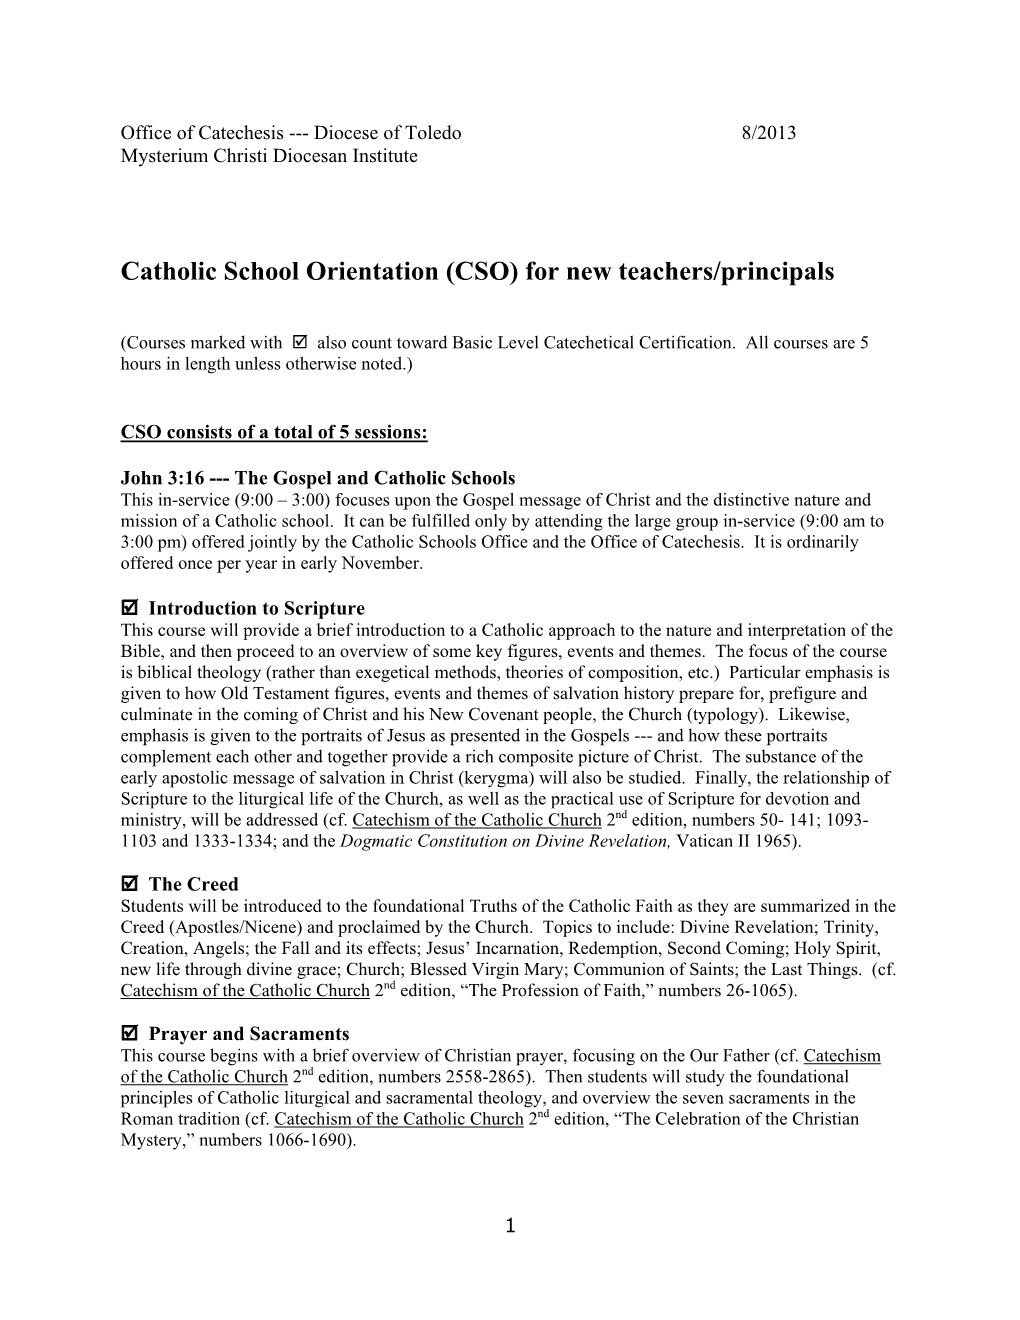 Catholic School Orientation (CSO) for New Teachers/Principals